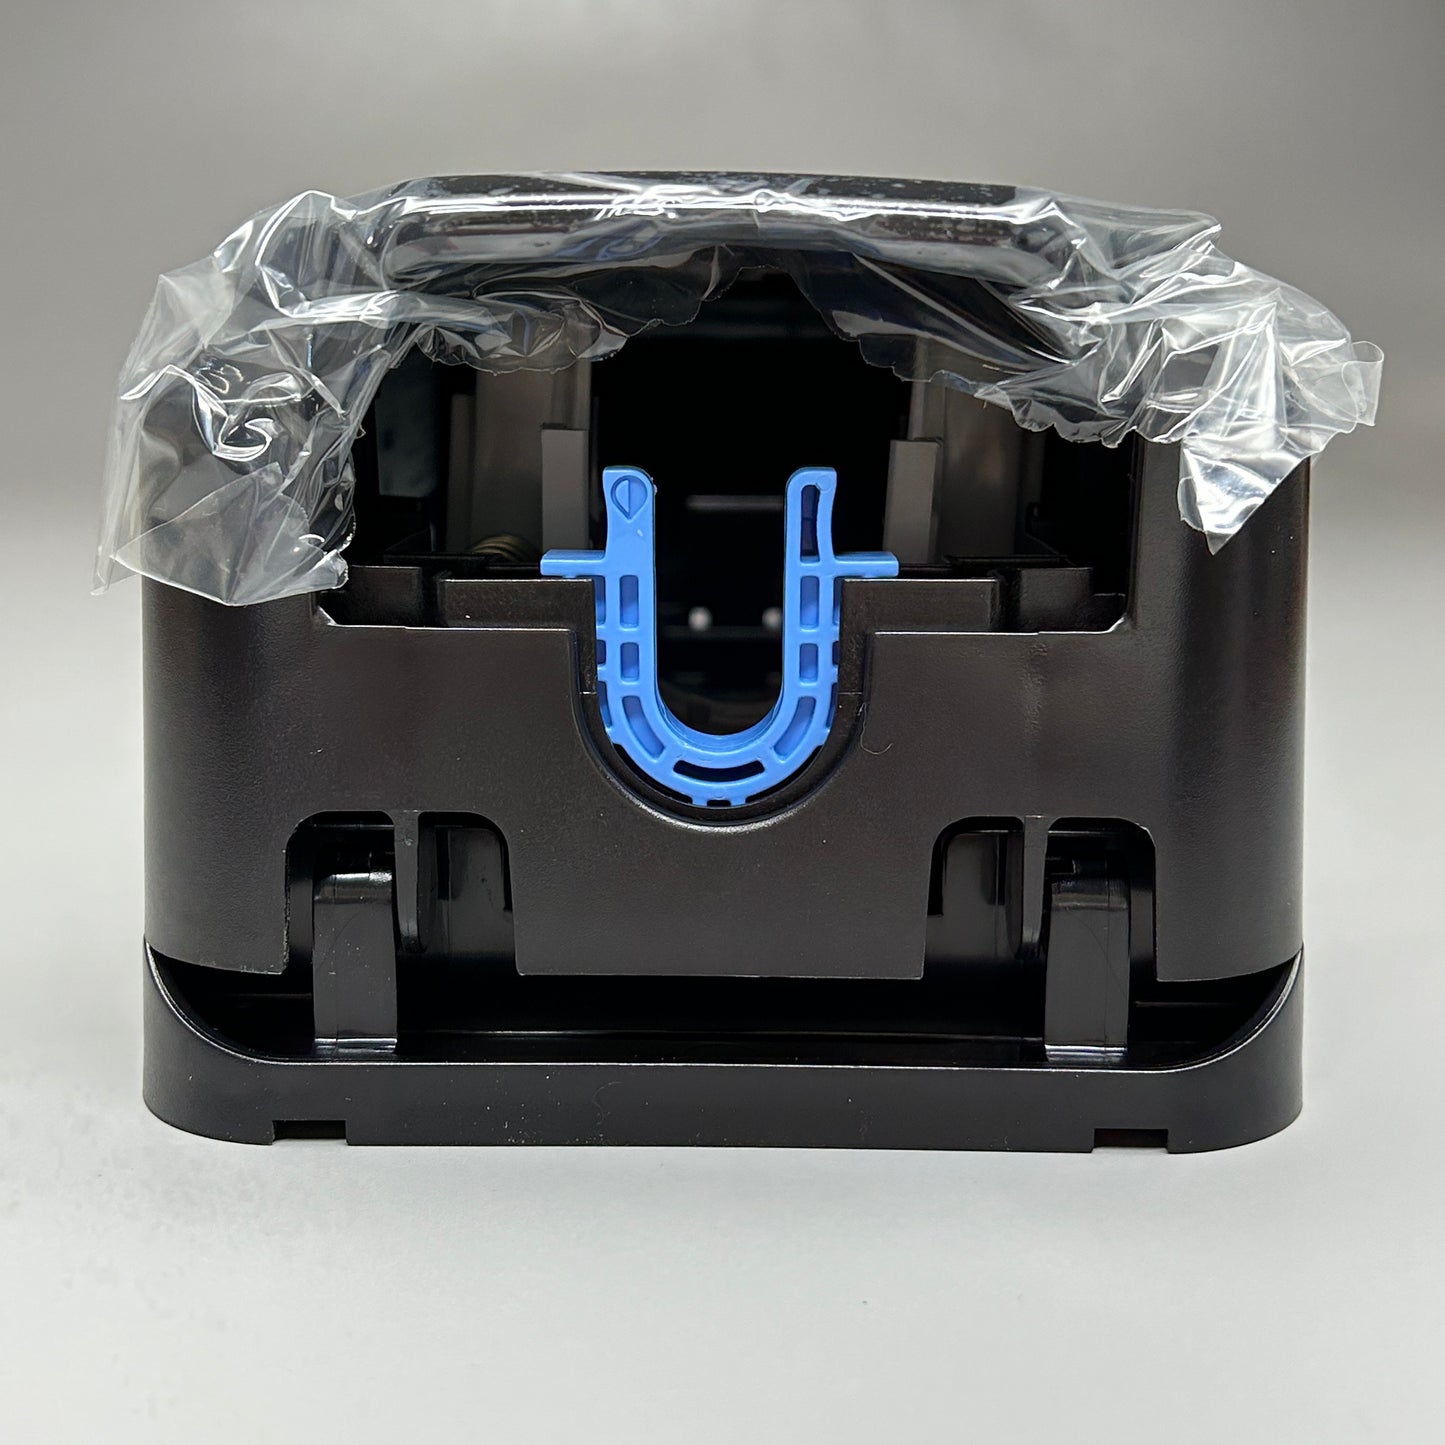 GEORGIA PACIFIC Pacific Blue Ultra Manual Soap Dispenser 53057 Black (New)